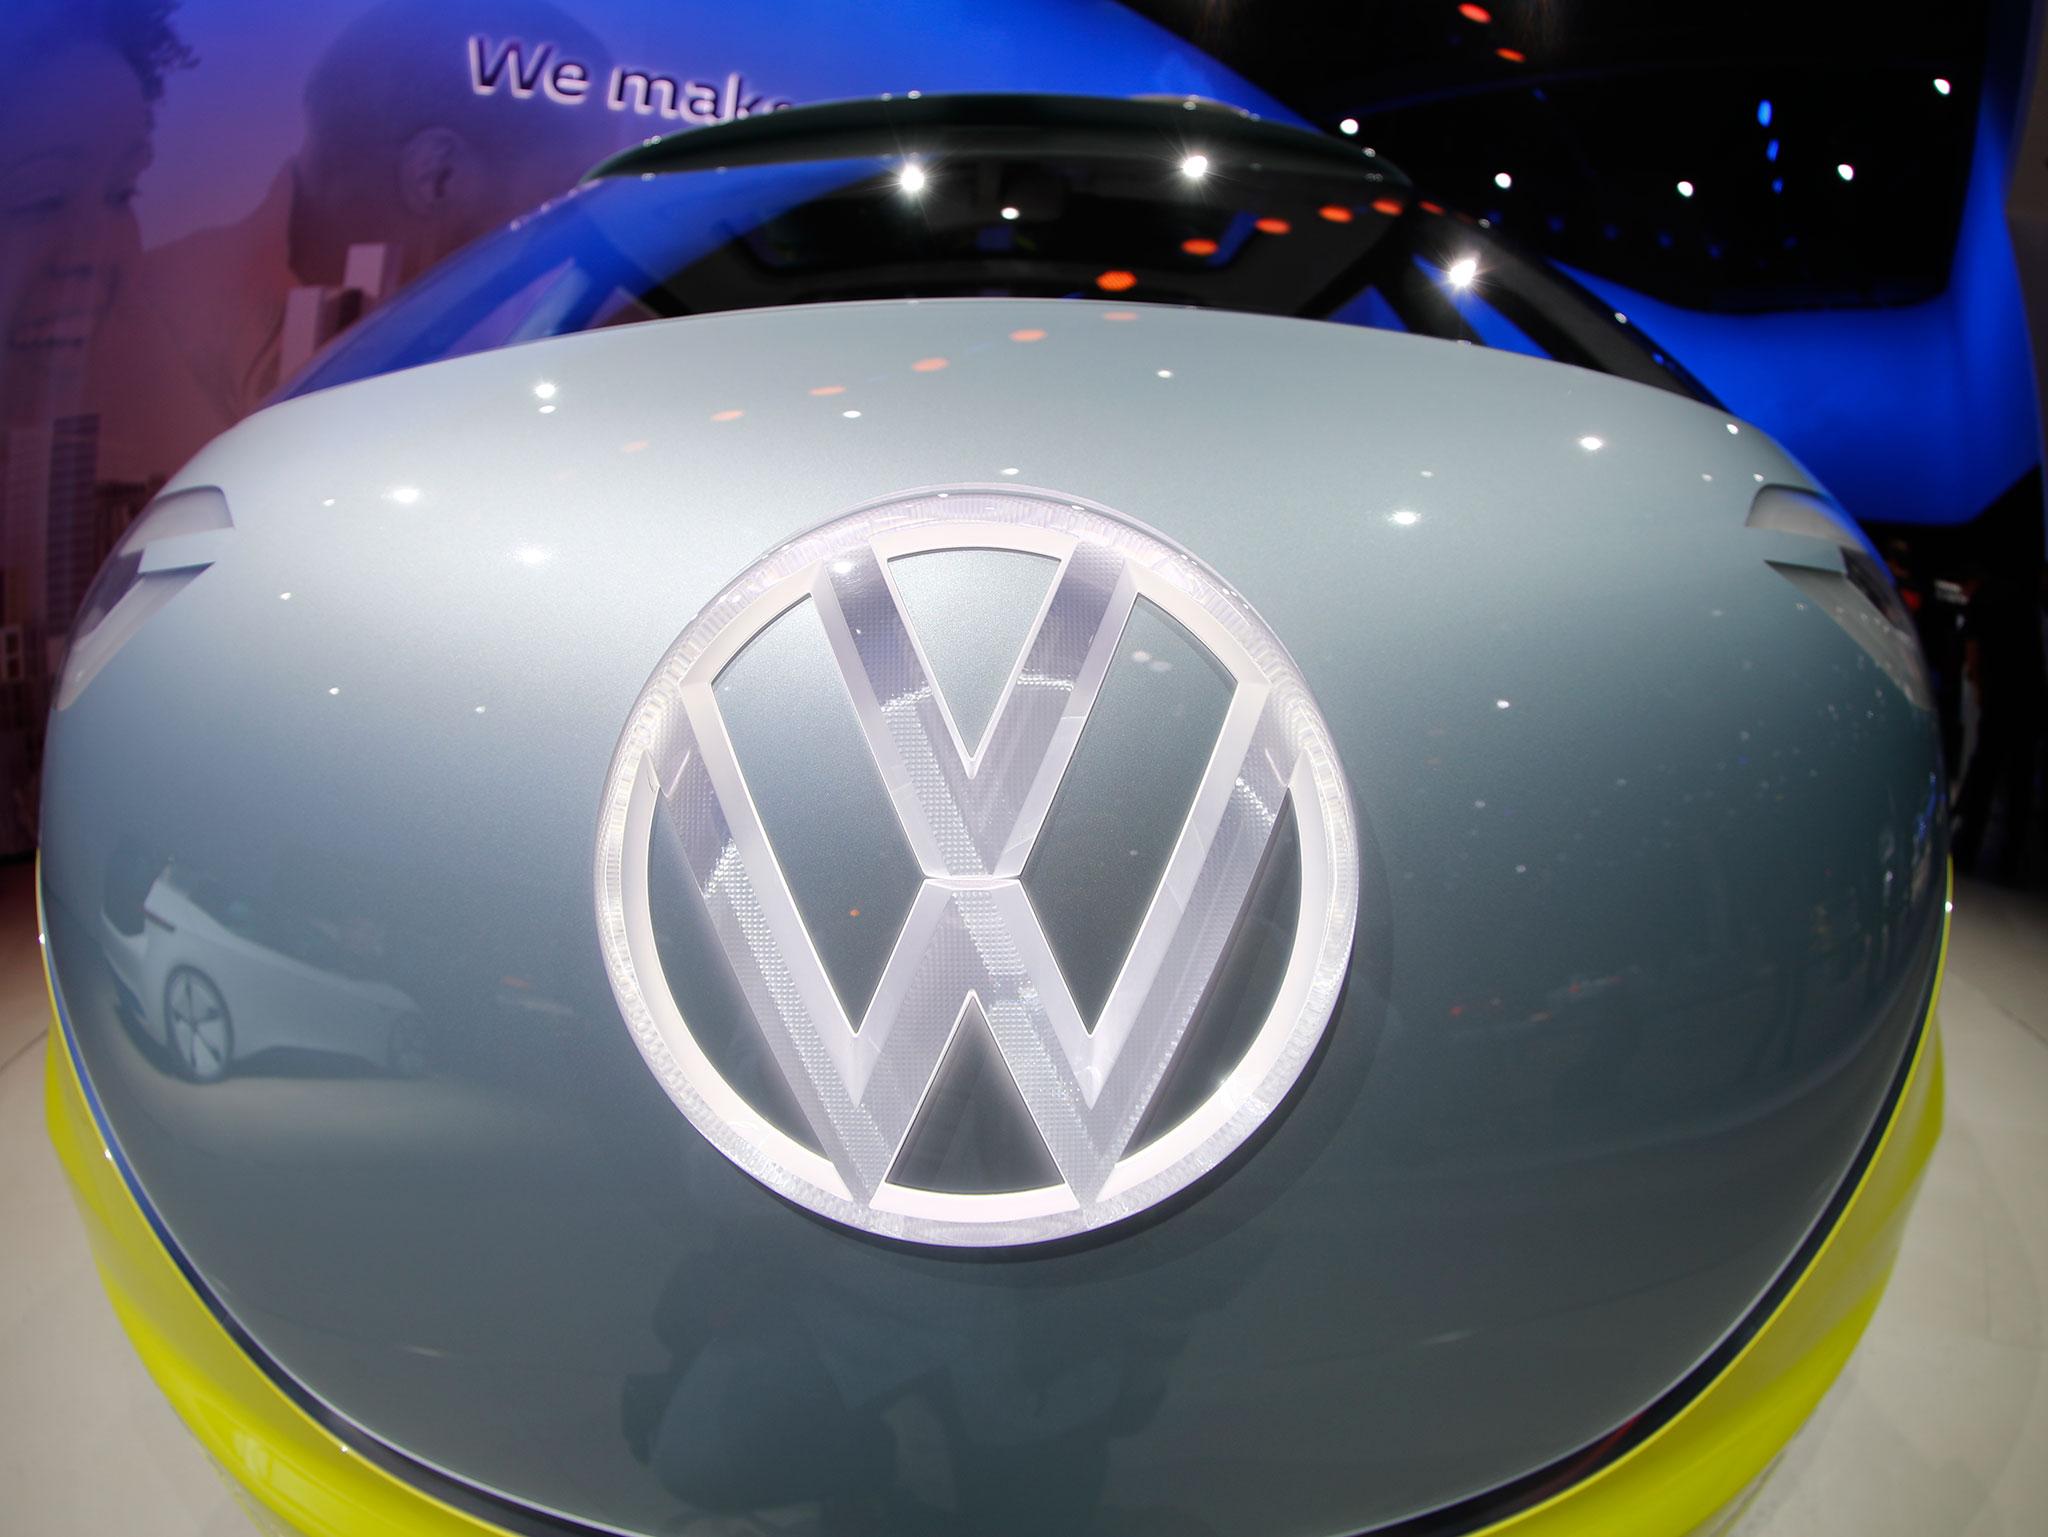 Volkswagen's latest quarterly result beat the highest estimate of €4.17bn